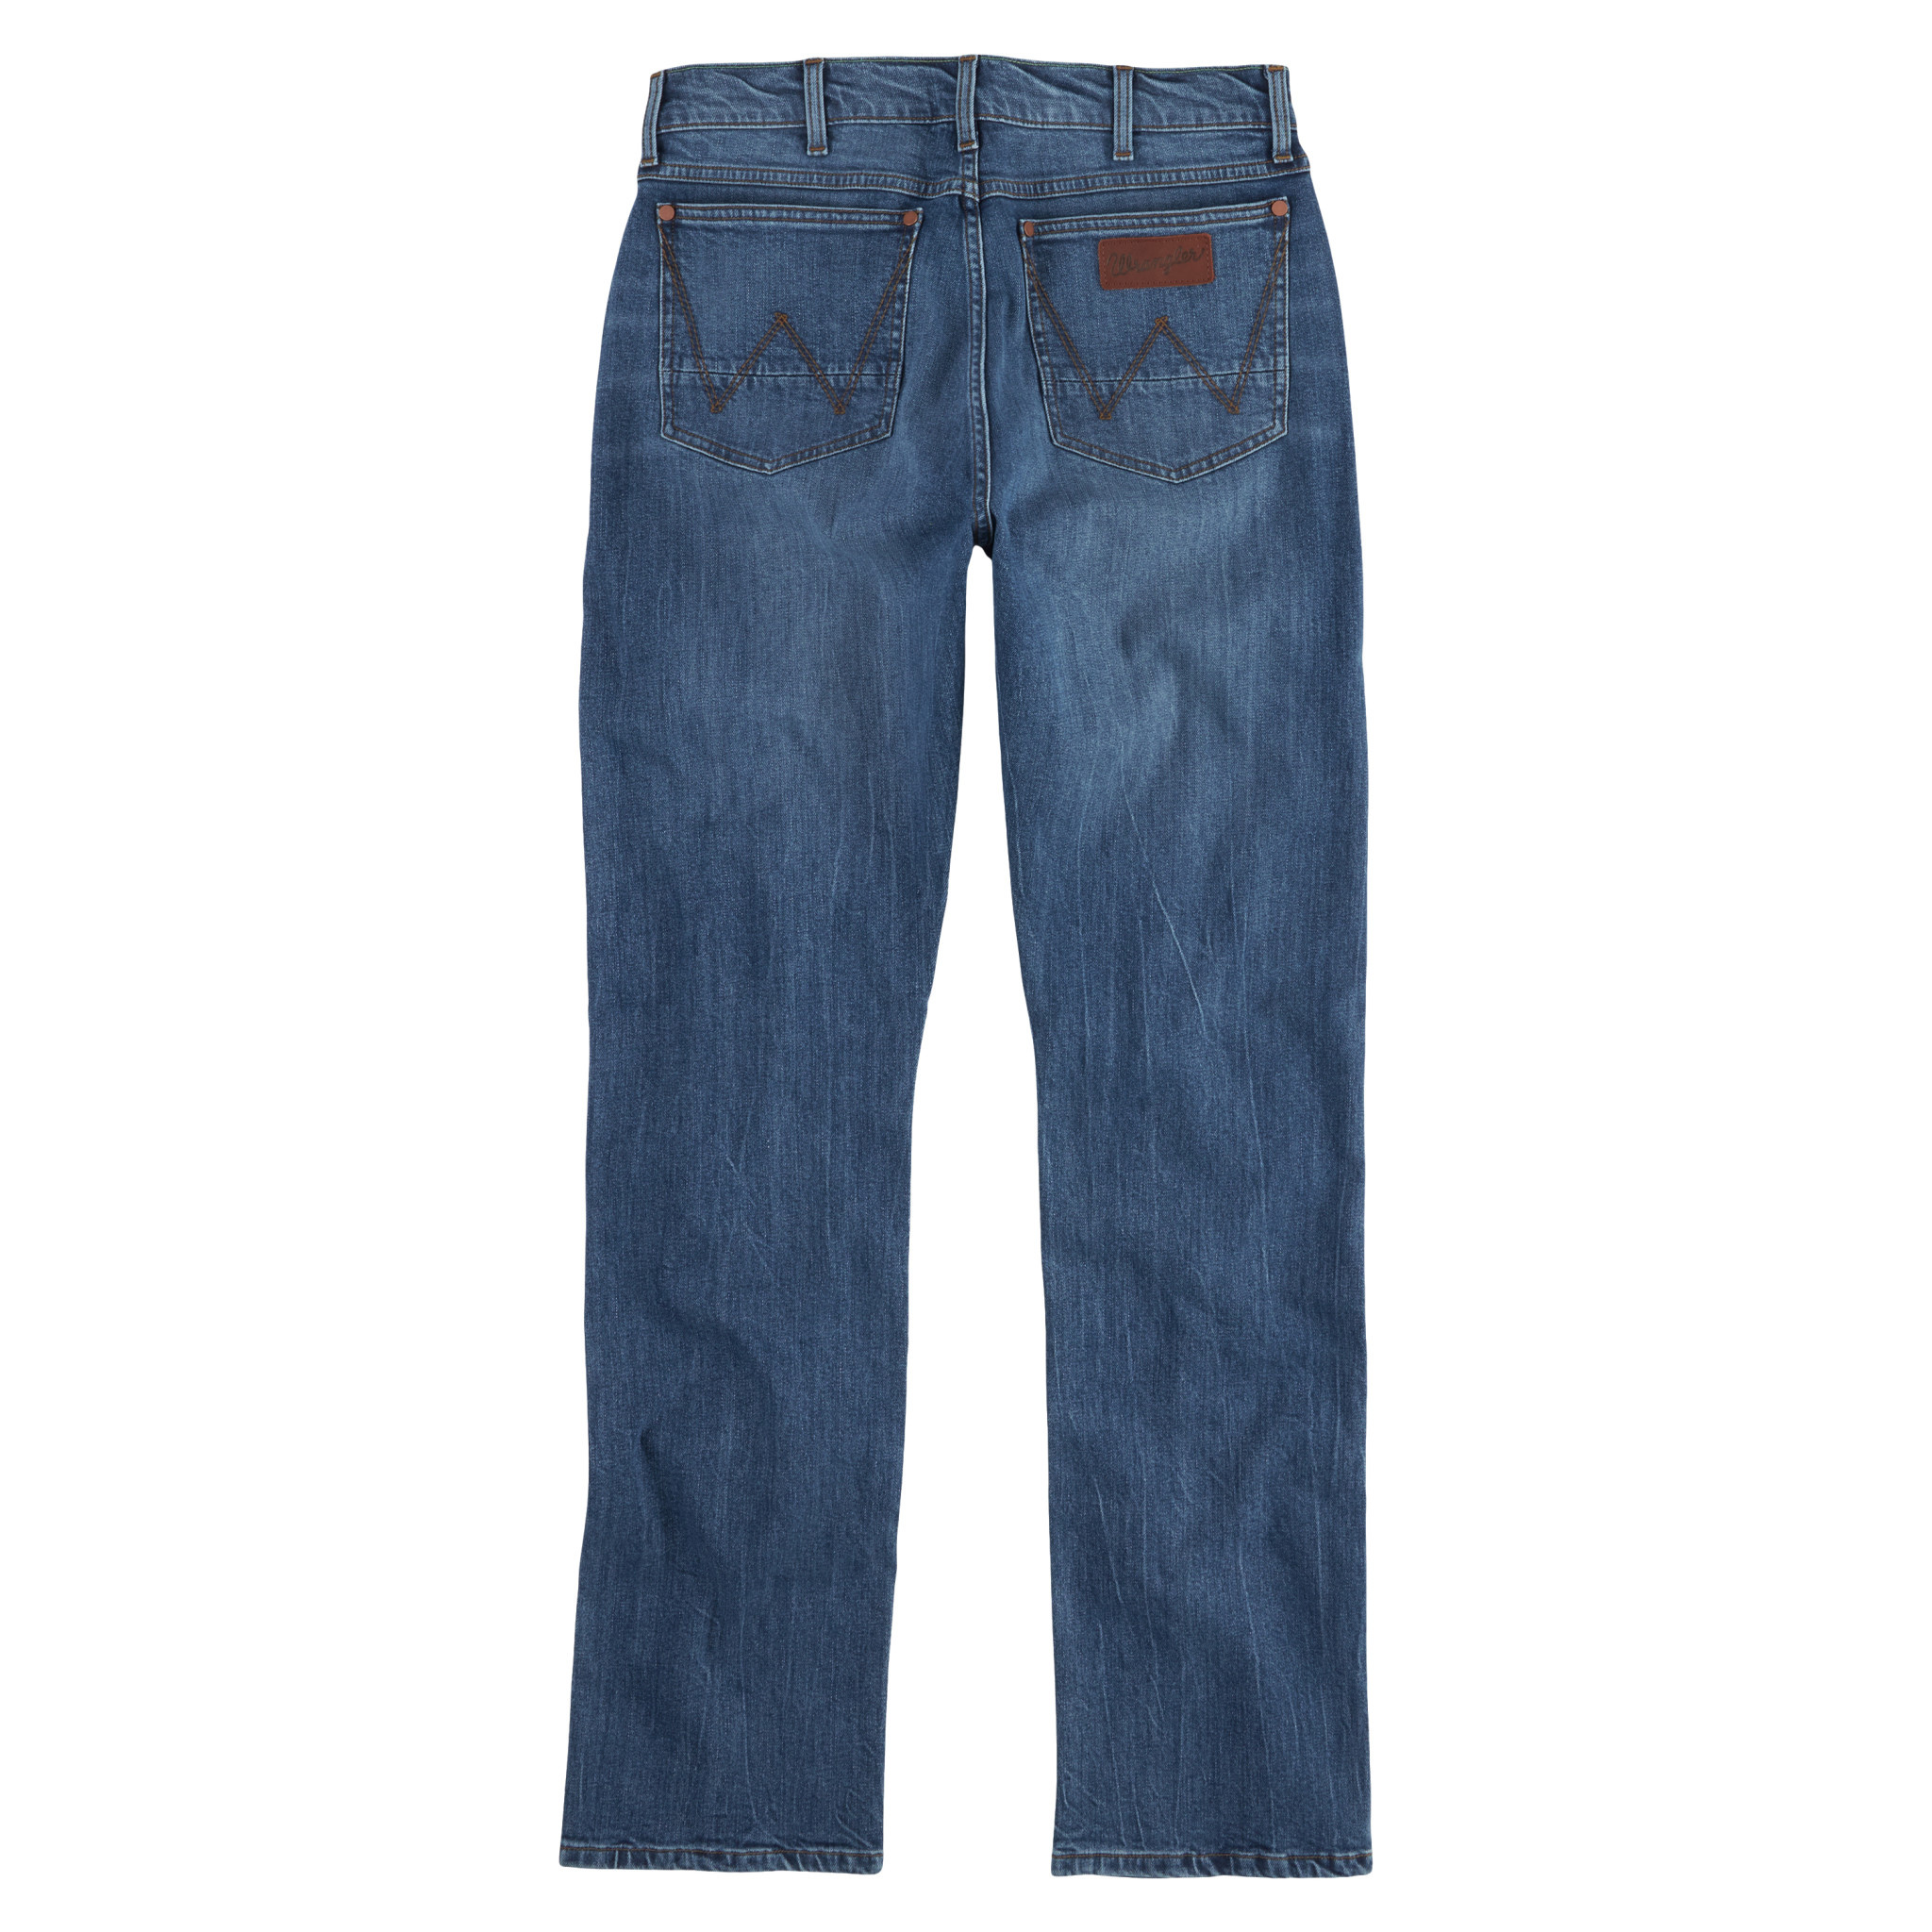 Buy Wrangler Dark Blue Cotton Straight Fit Jeans for Mens Online @ Tata CLiQ